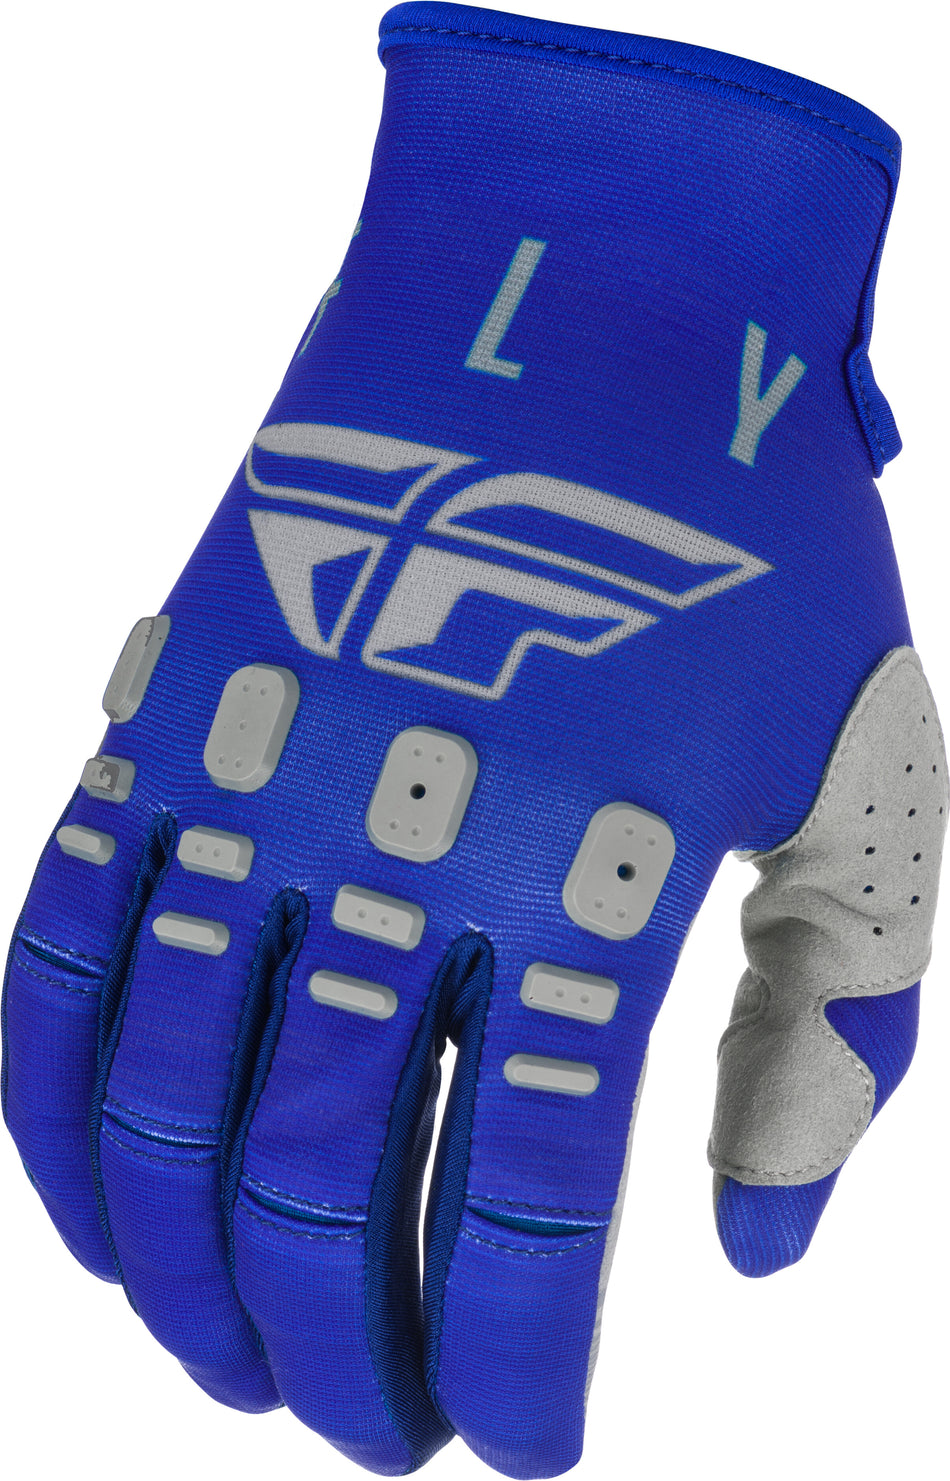 FLY RACING Kinetic K121 Gloves Blue/Navy/Grey Sz 08 374-41108